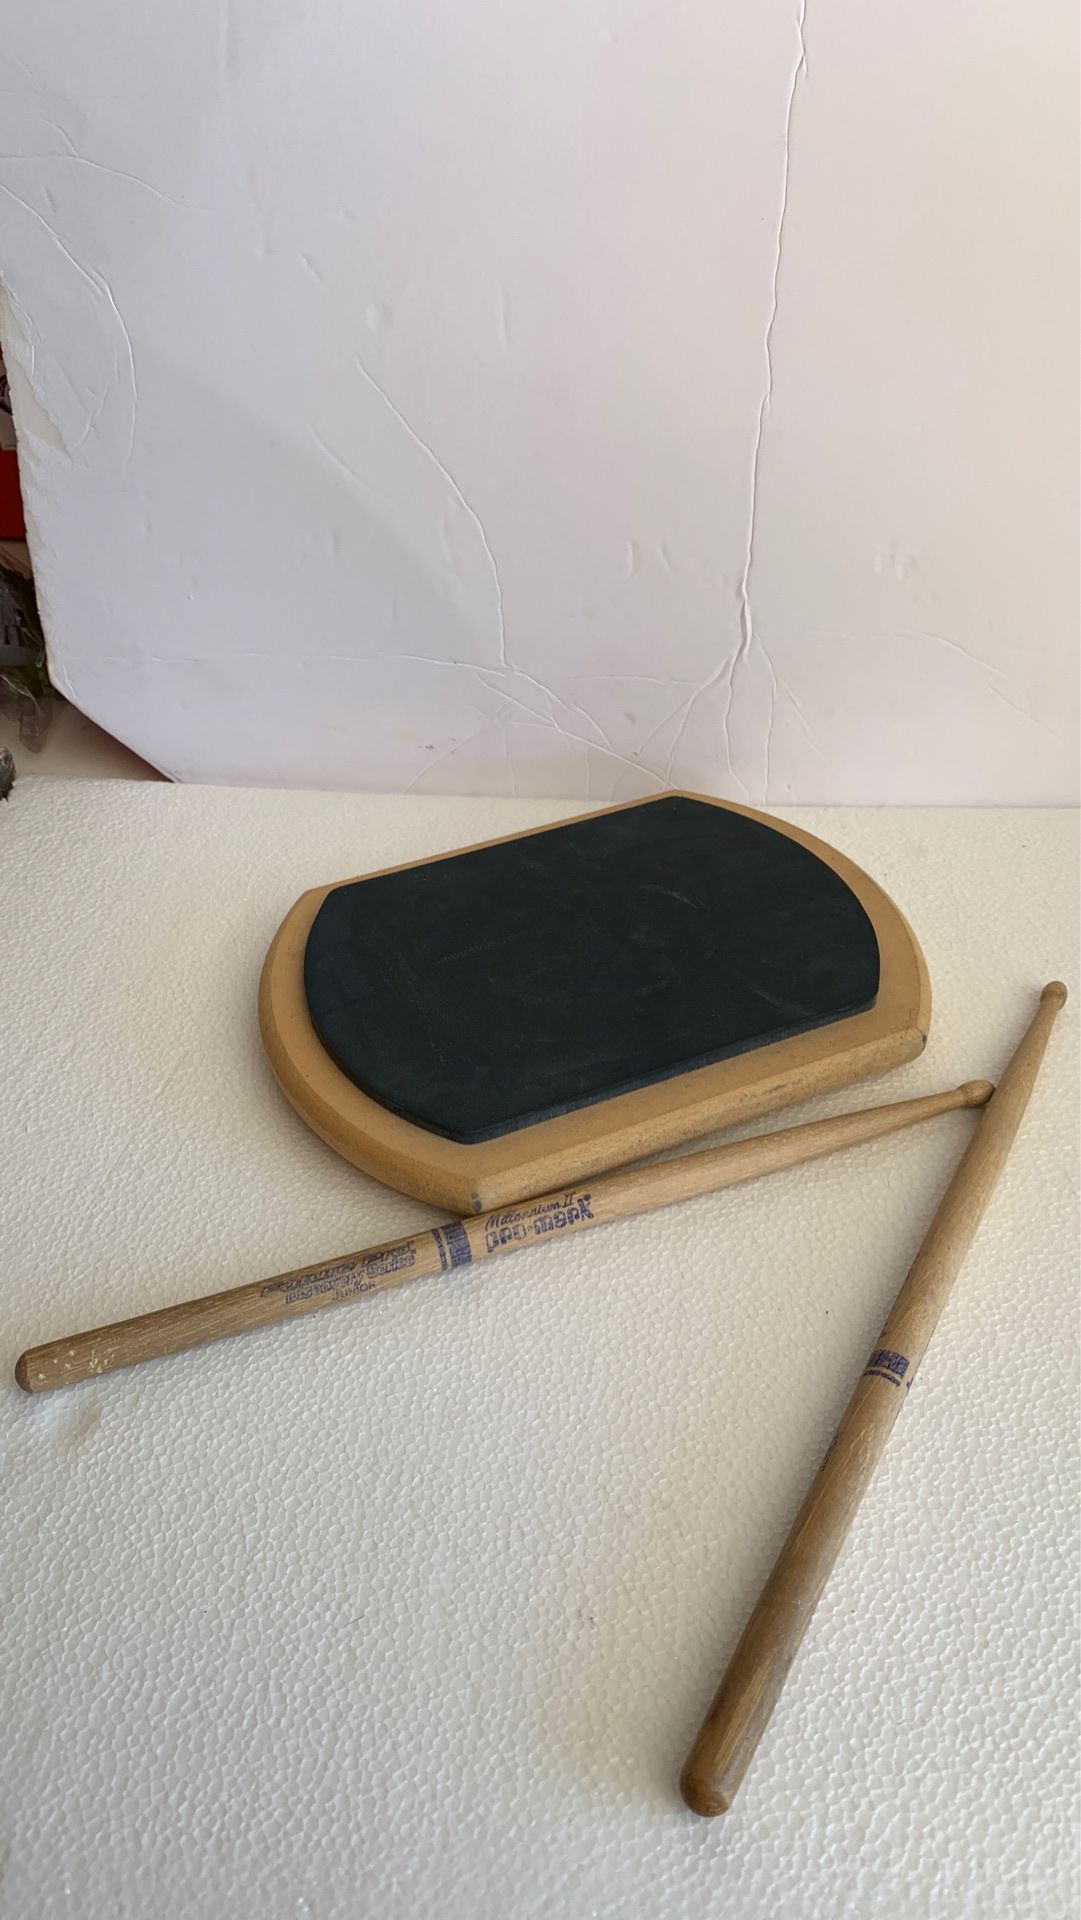 Drum pad & sticks